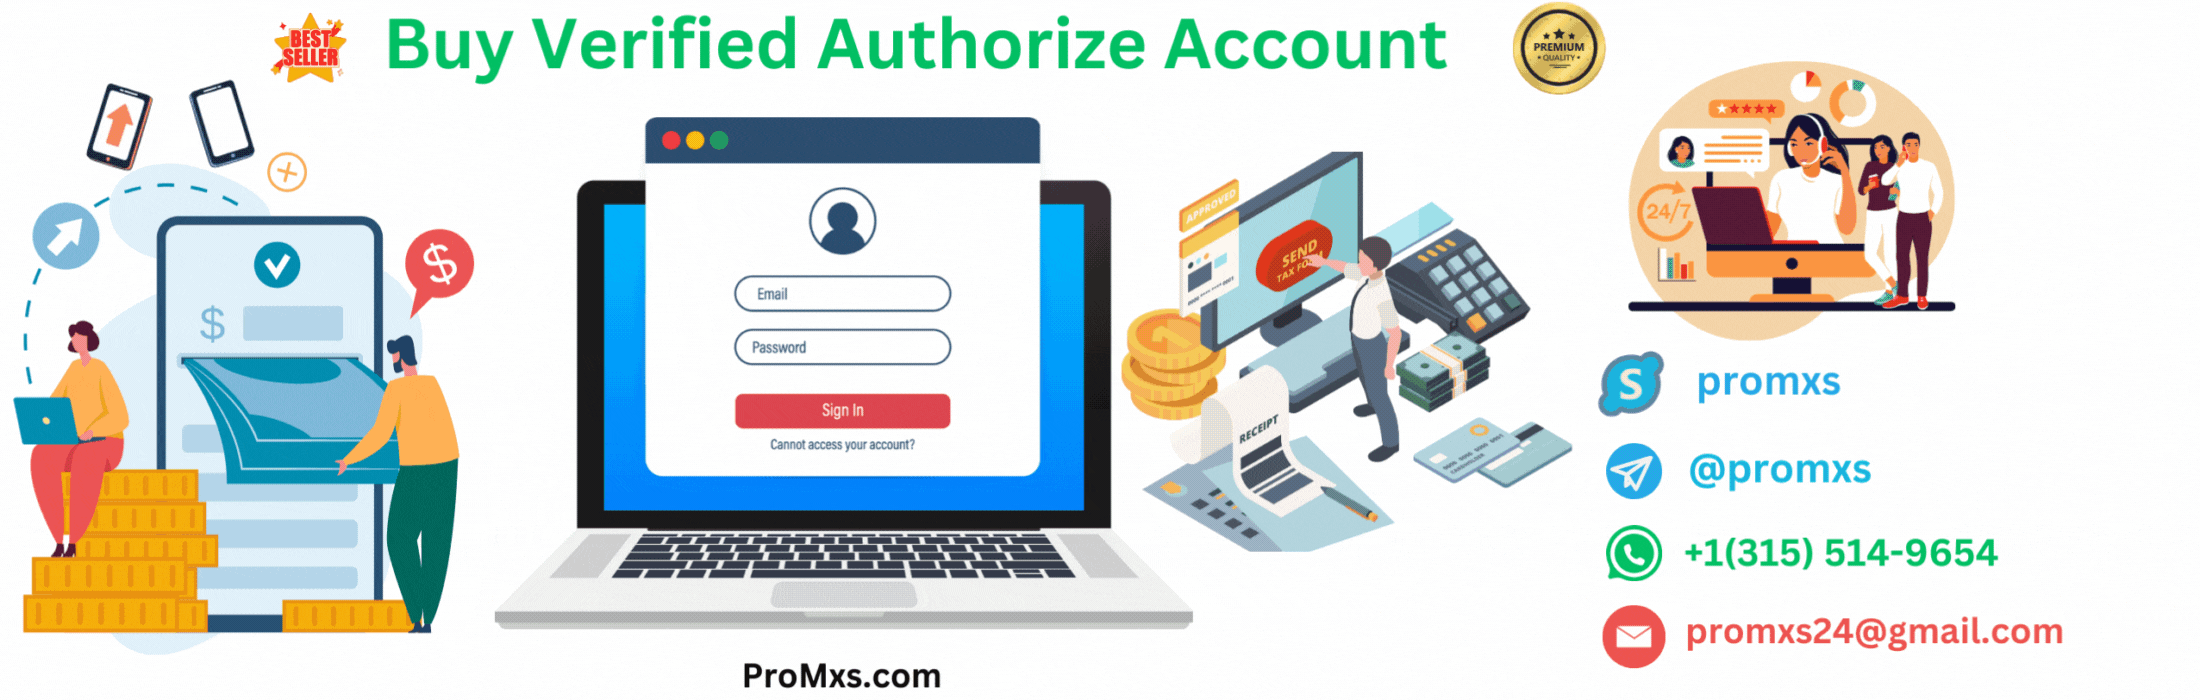 Buy Verified Authorize Account